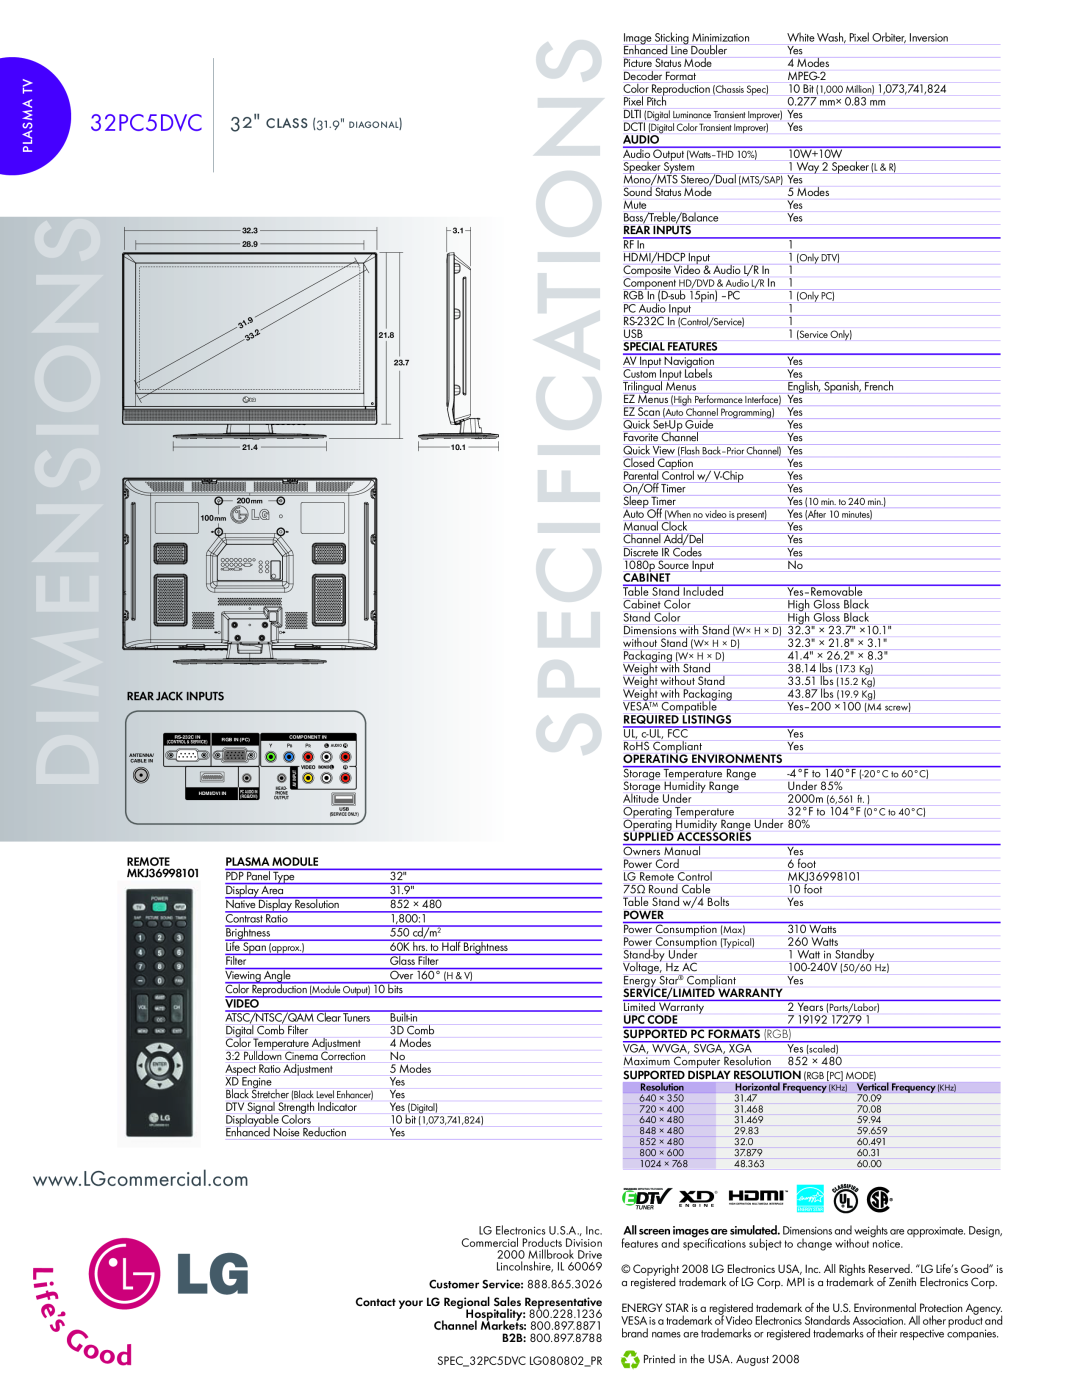 LG Electronics 32PC5DVC32 warranty dimensions, specifications, plasma, class 31.9 diagonal 